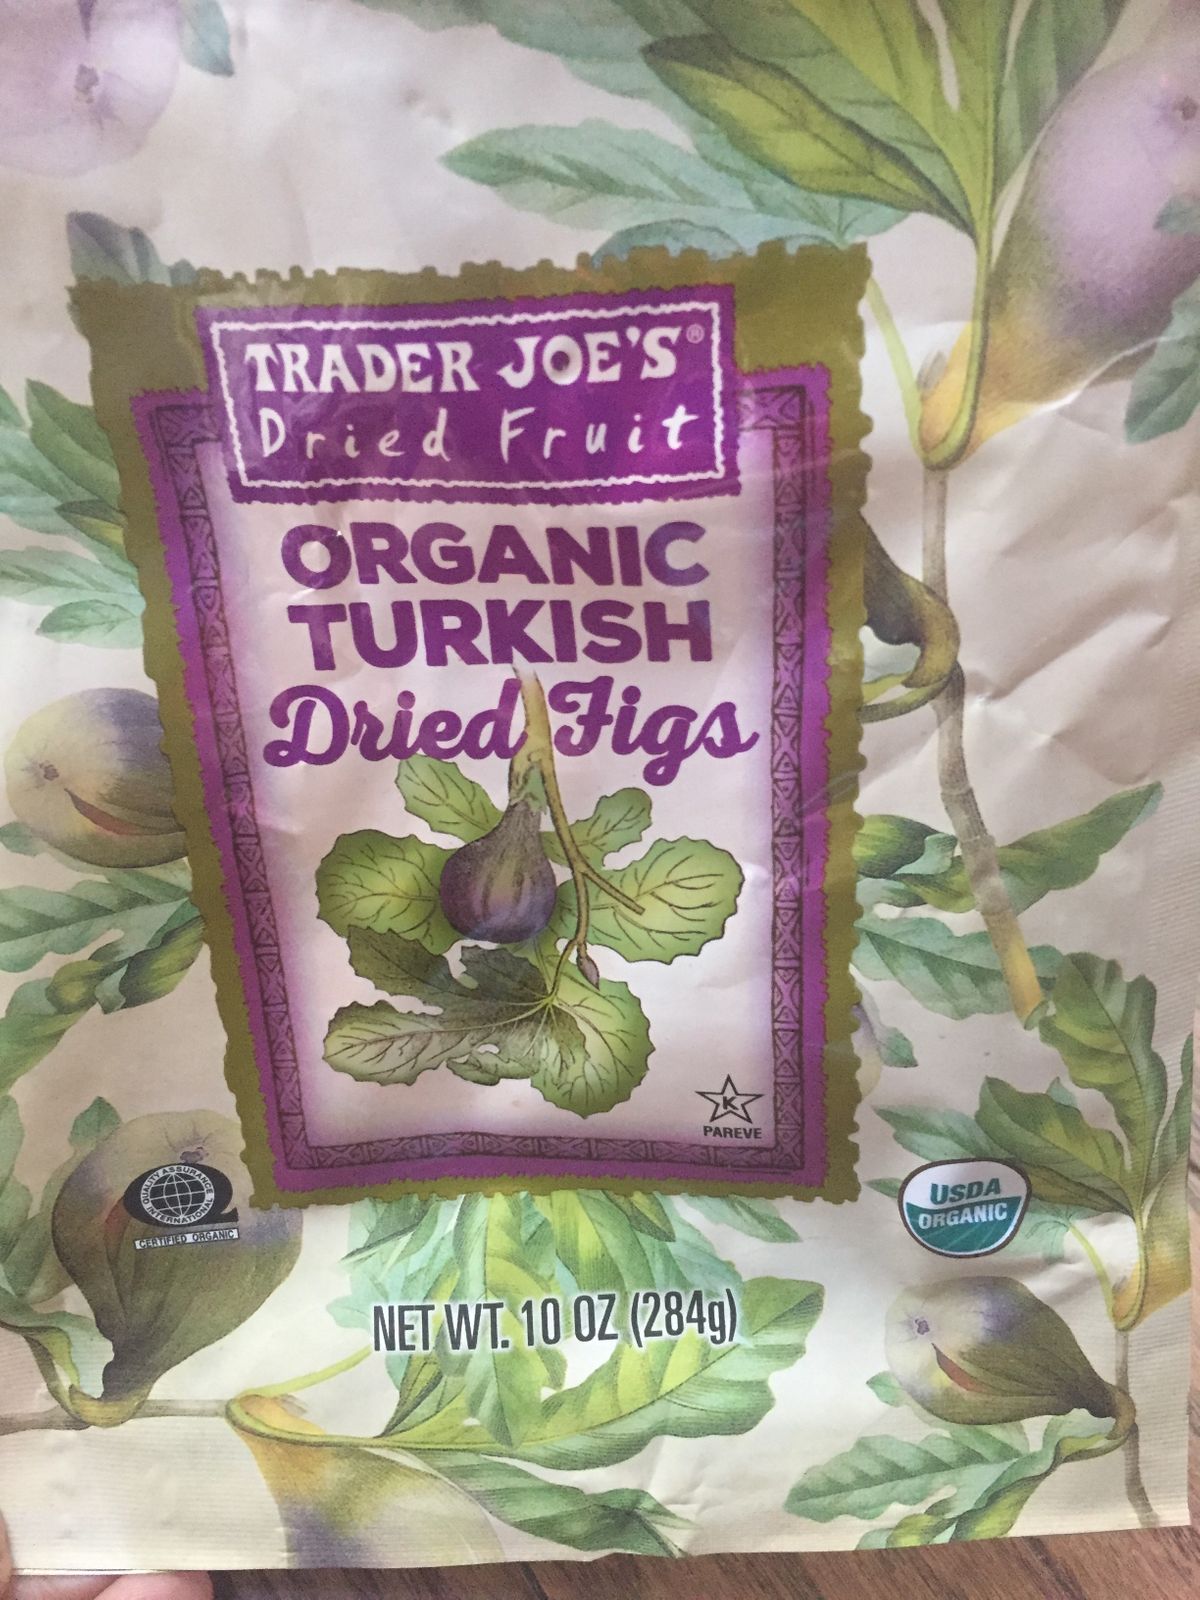 Organic Turkish Figs!